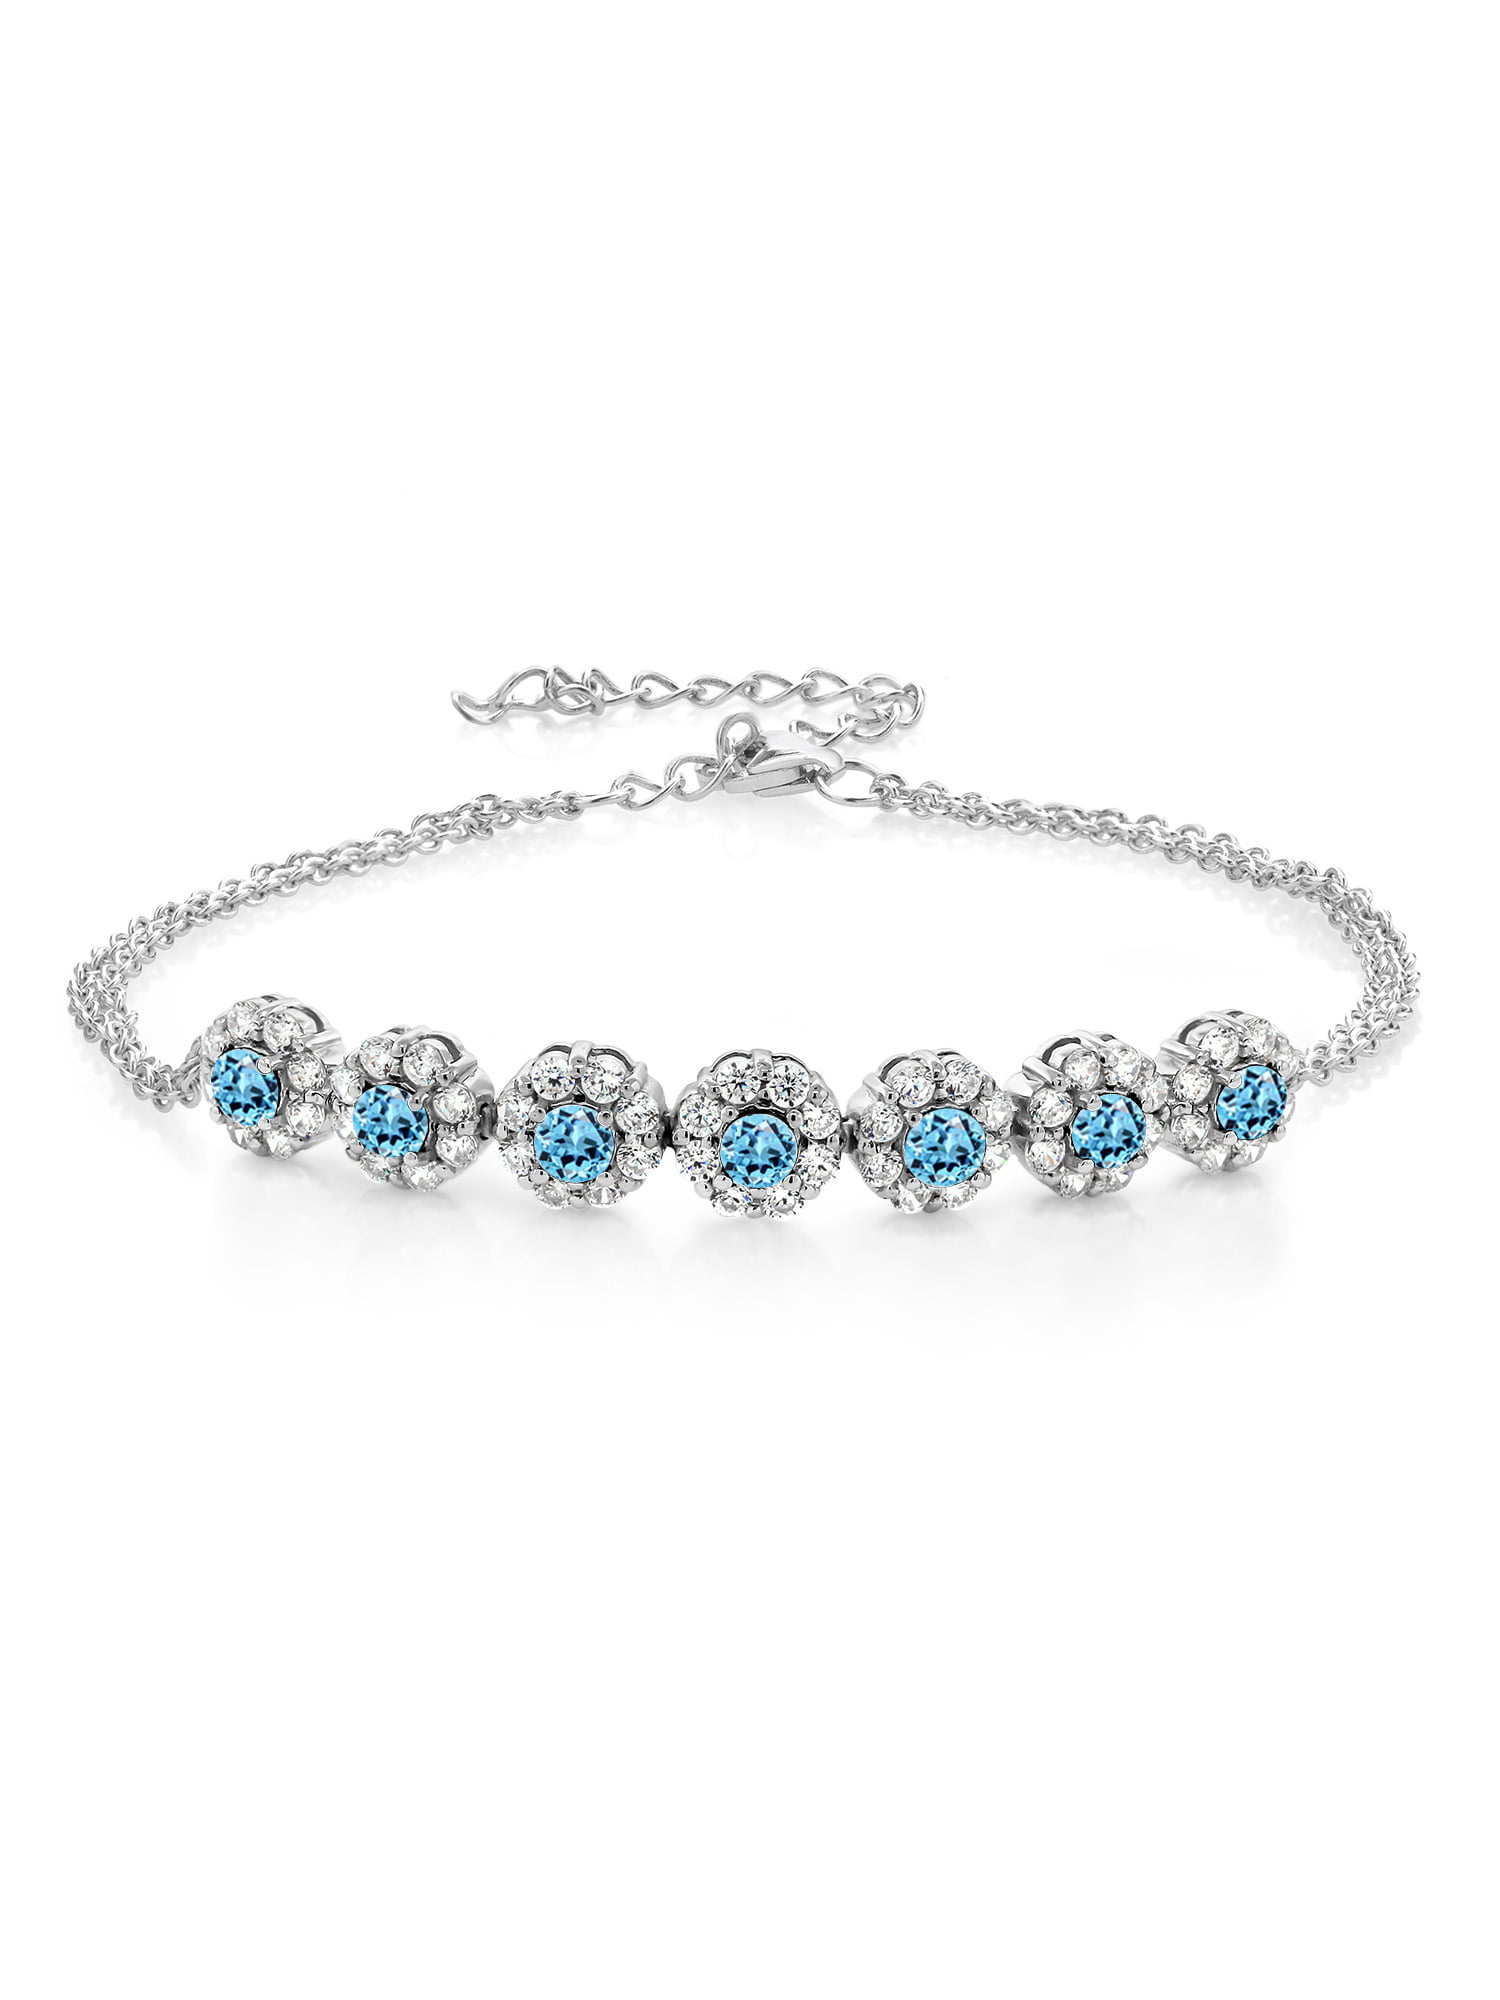 Pearl & Blue Topaz Bracelet - Sugarloaf | Kailis Jewellery